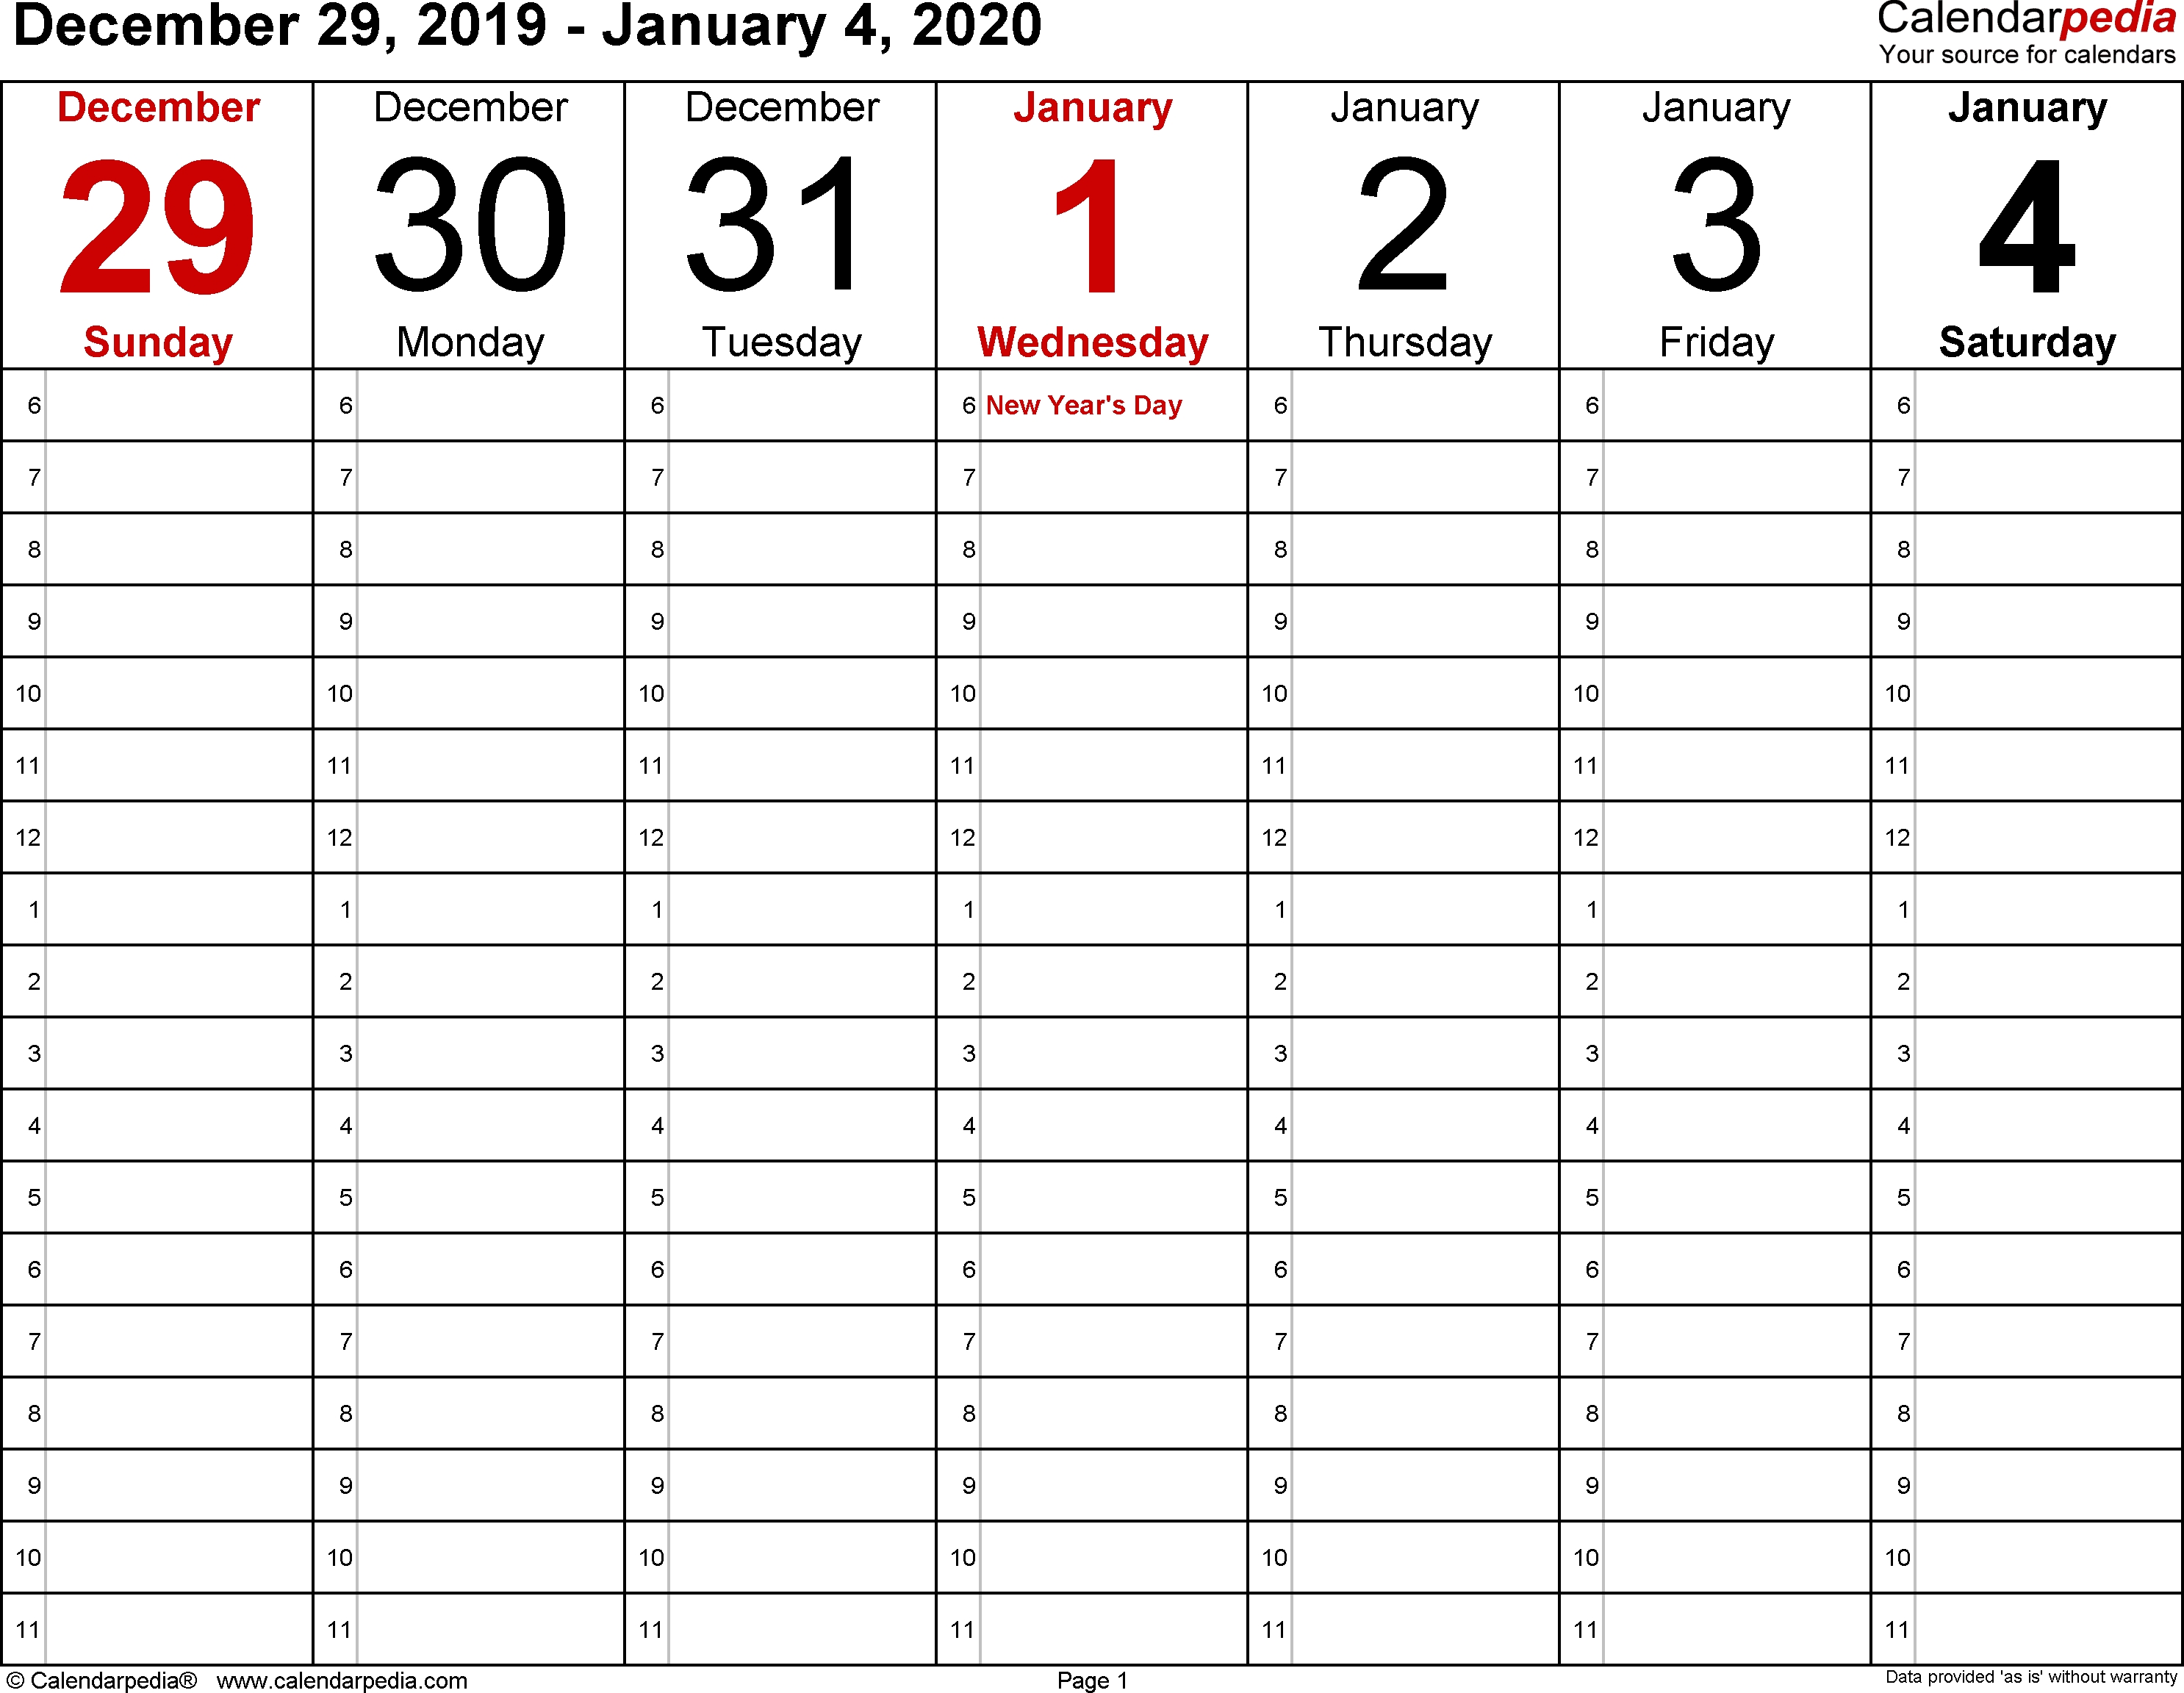 Weekly Calendar 2020 For Word - 12 Free Printable Templates-Weekly Calendar 2020 Template Students 7 Days A Week